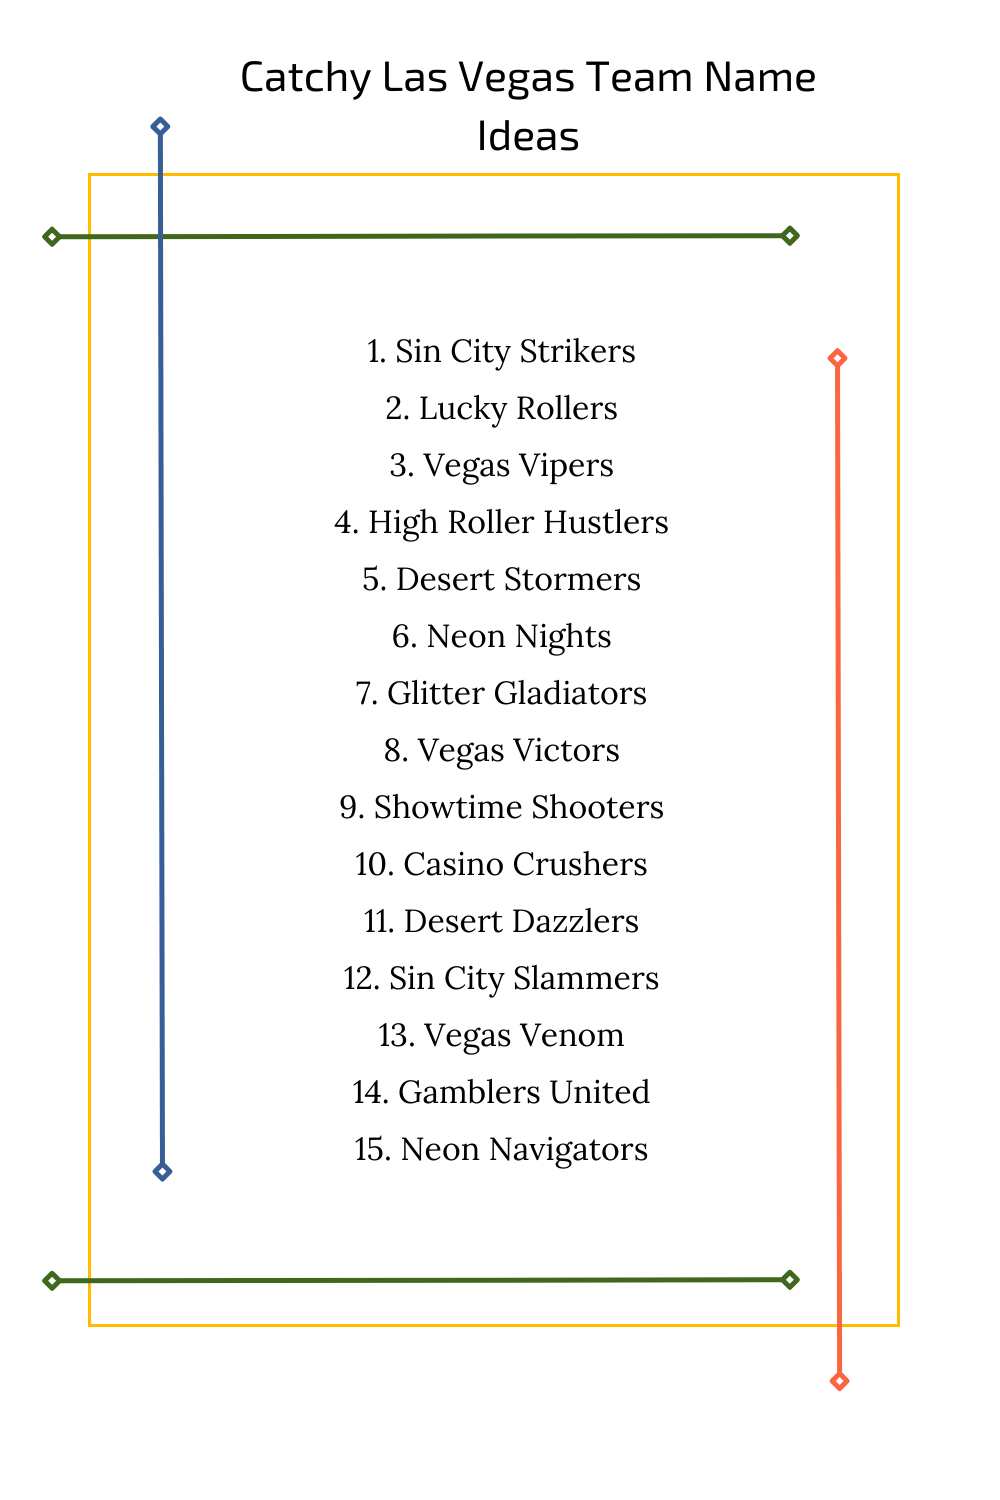 Catchy Las Vegas Team Name Ideas